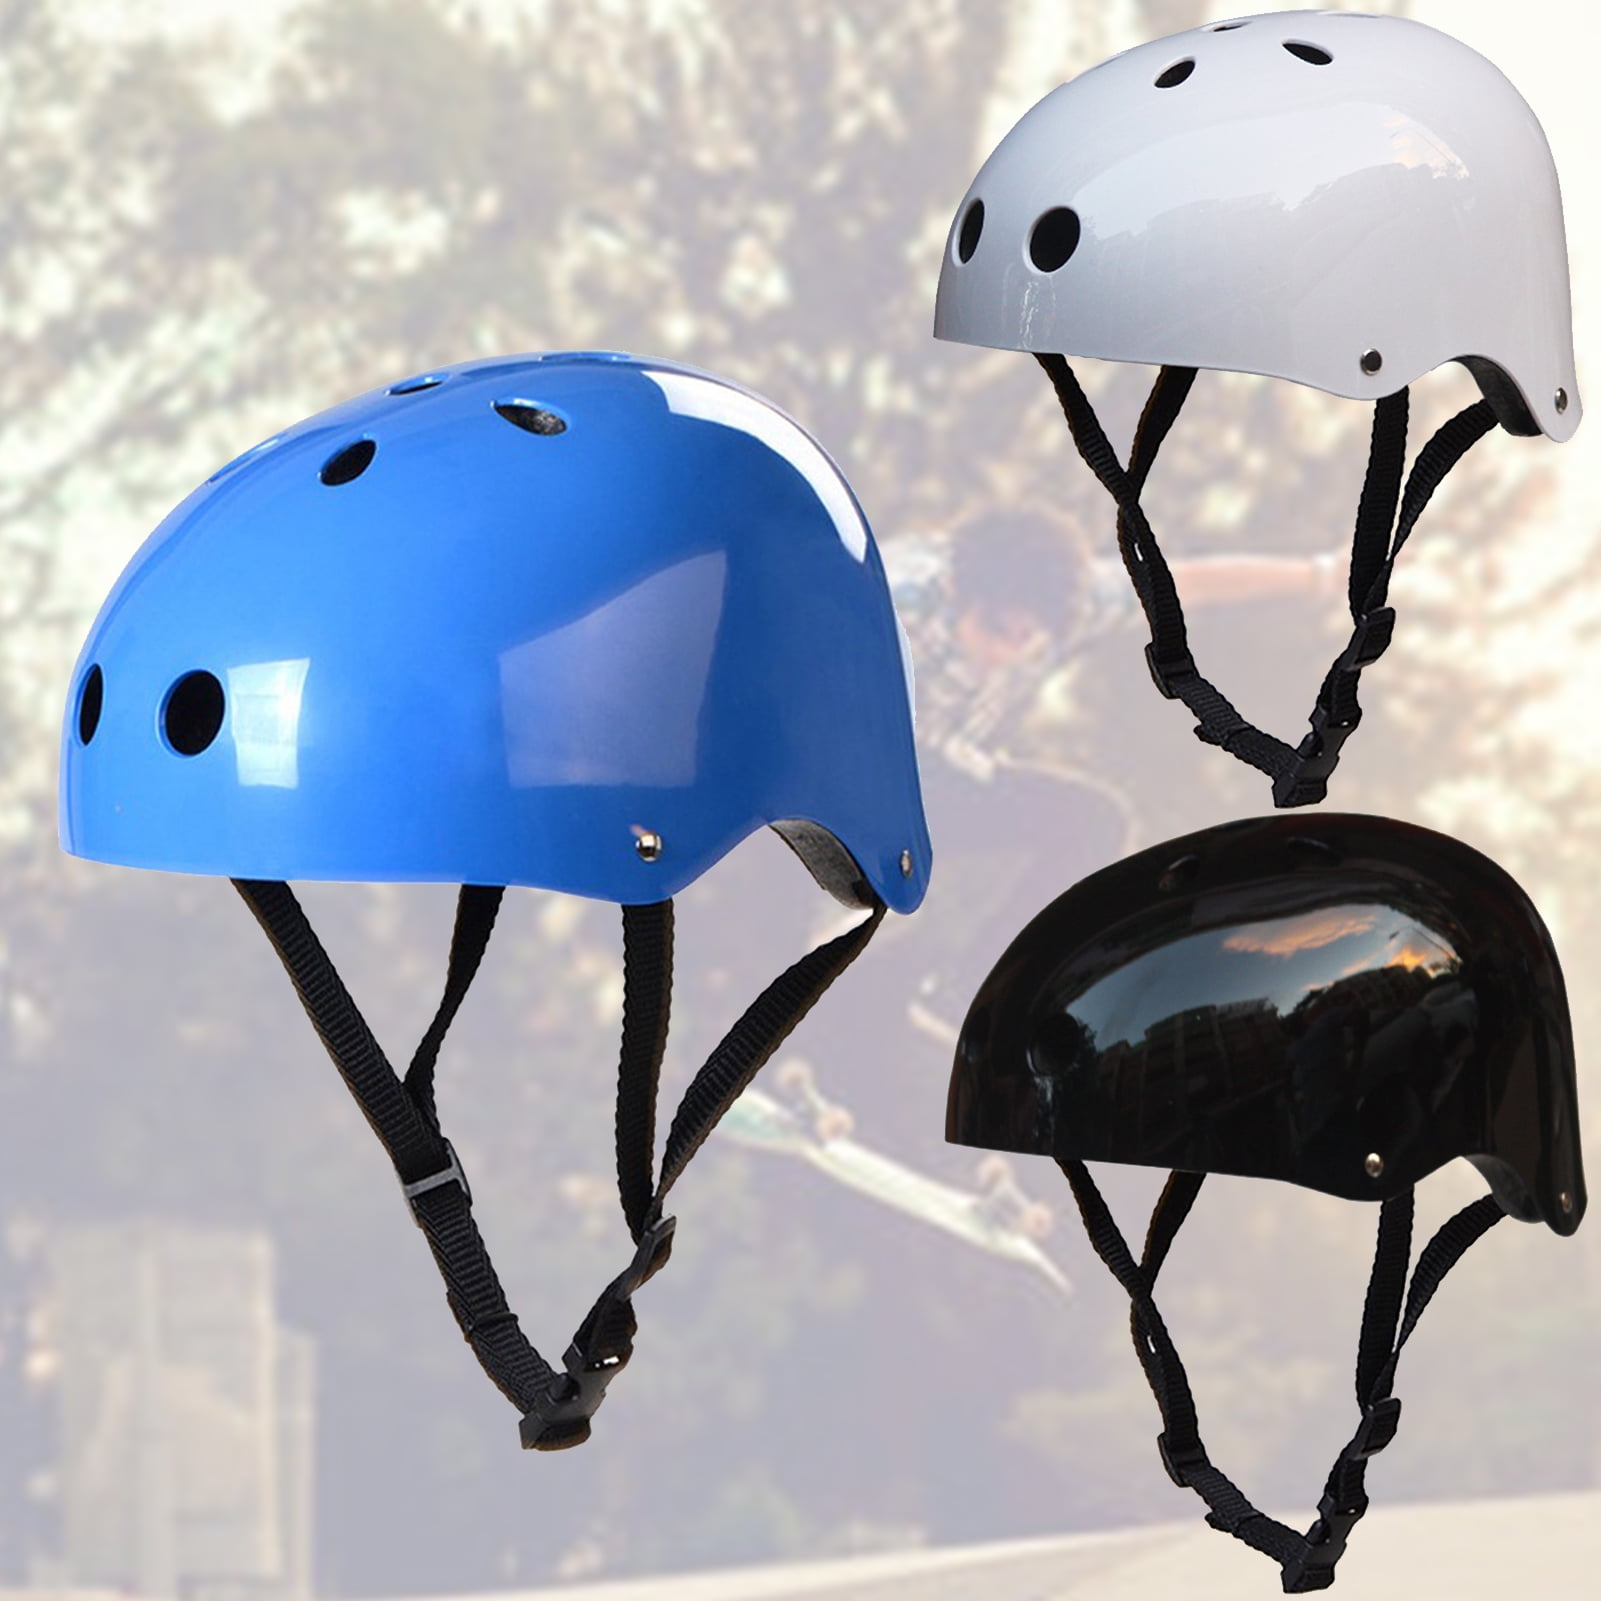 Adult Helmet Sparkle Purpl 58cm-60cm Cycling Skateboard Scooter Protective Gear 